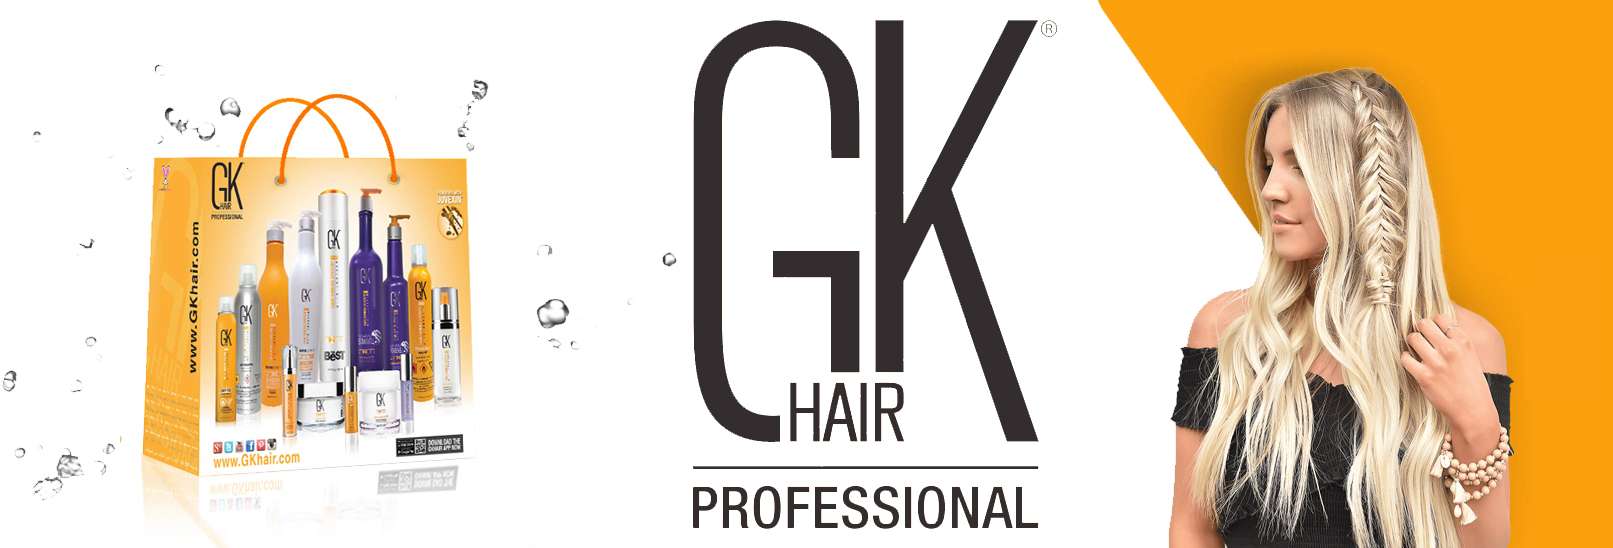 GLOBAL KERATIN - GKhair Professional